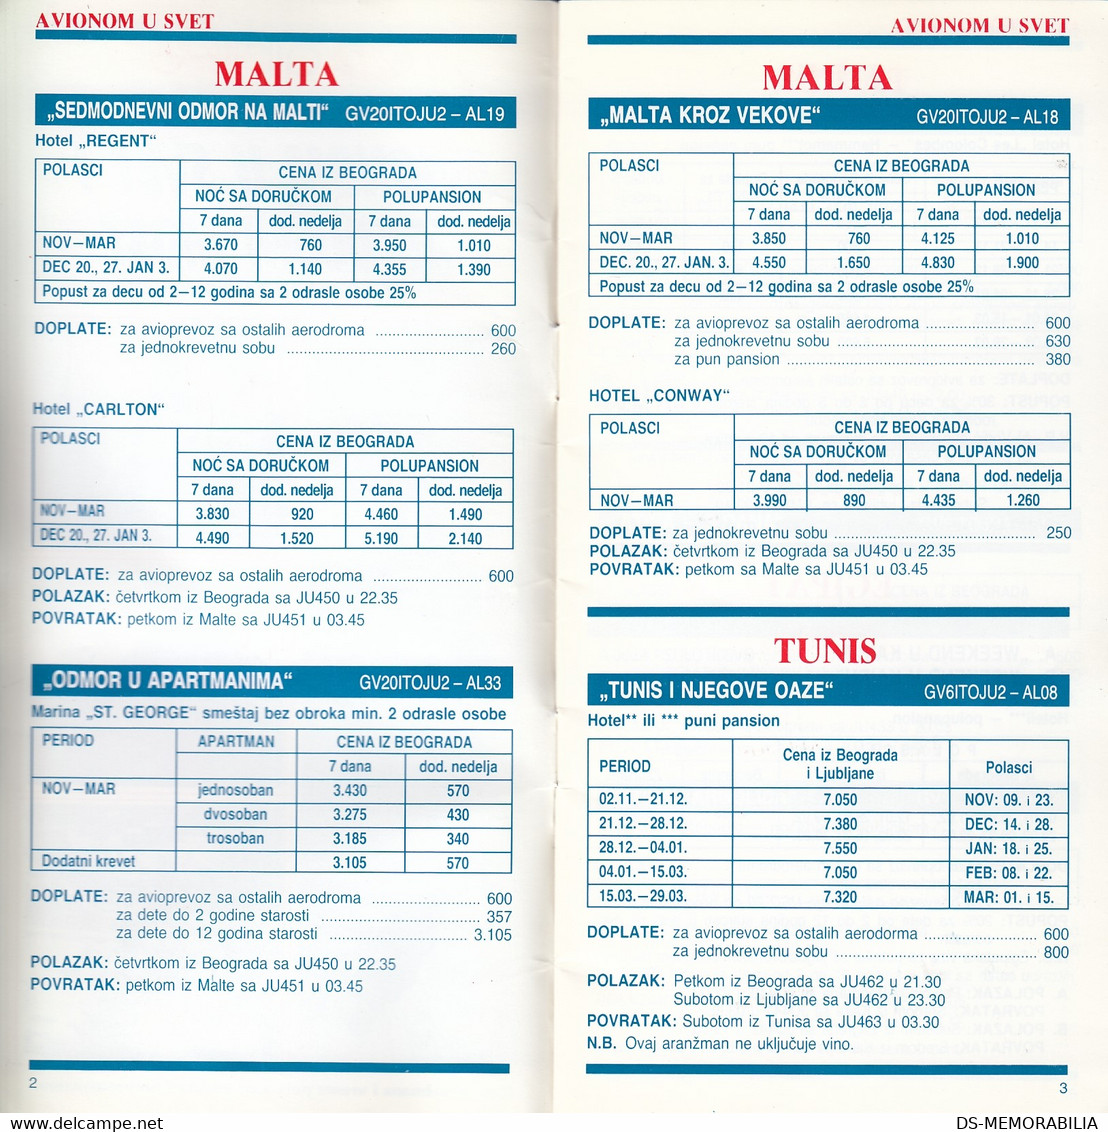 1990/91 JAT Yugoslav Airlines Air Lift Price List - Timetables